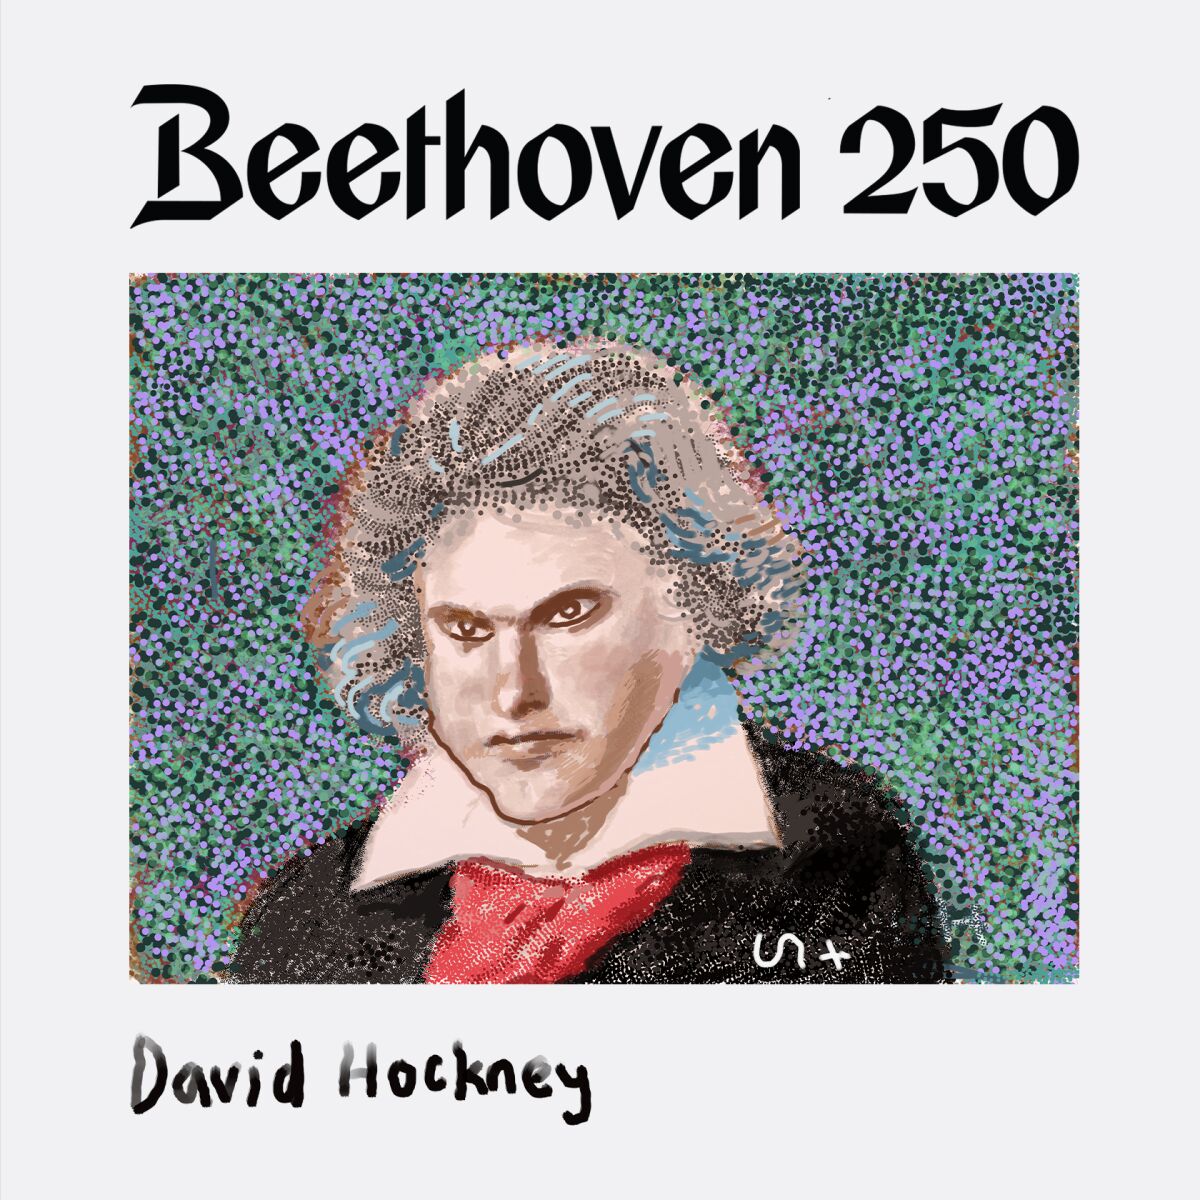 David Hockey's iPad portrait of Ludwig van Beethoven to celebrate his 250th birthday.